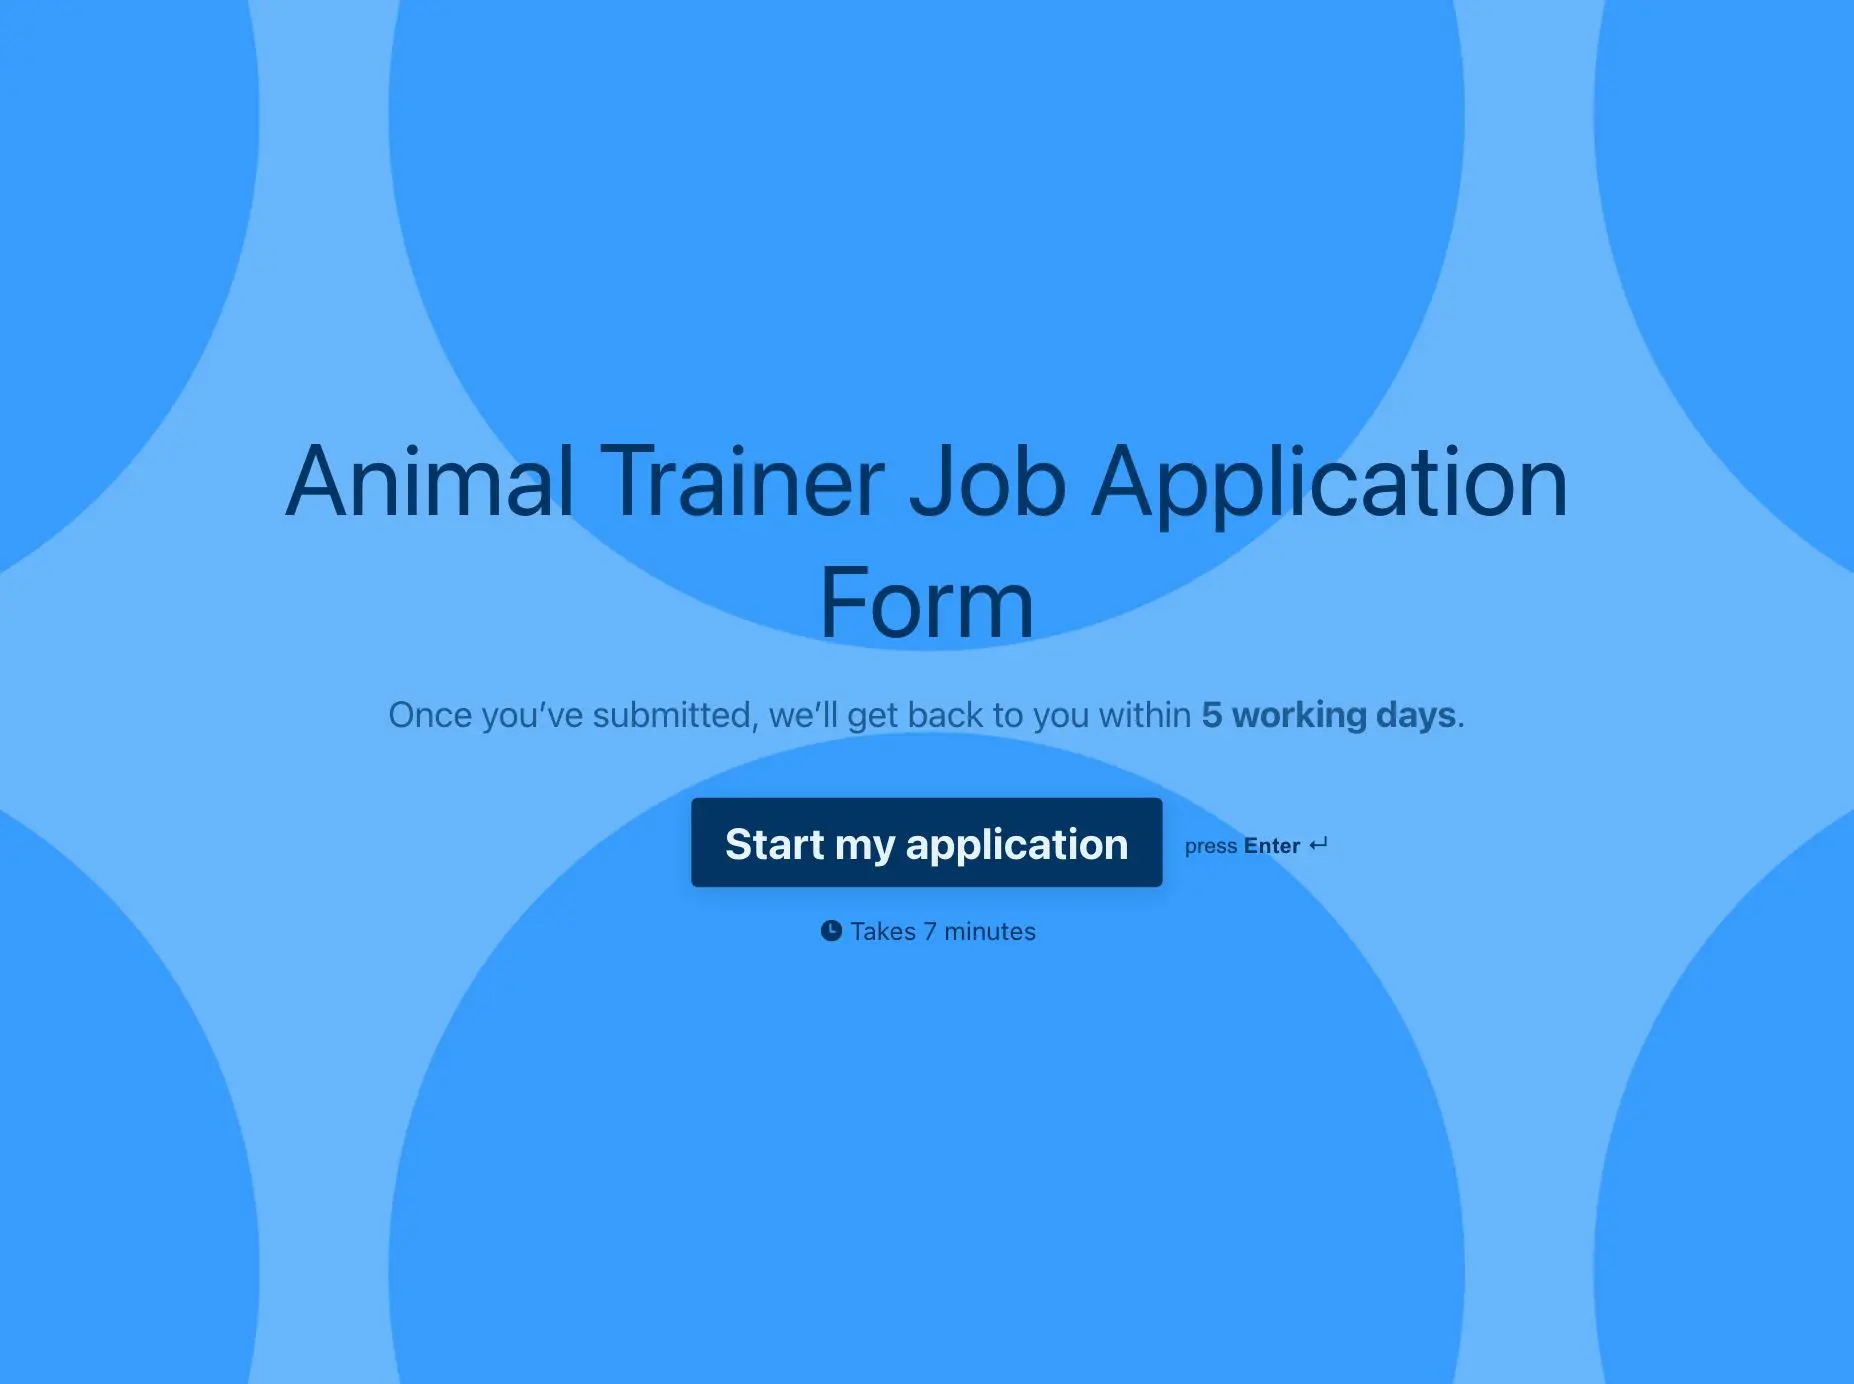 Animal Trainer Job Application Form Template Hero